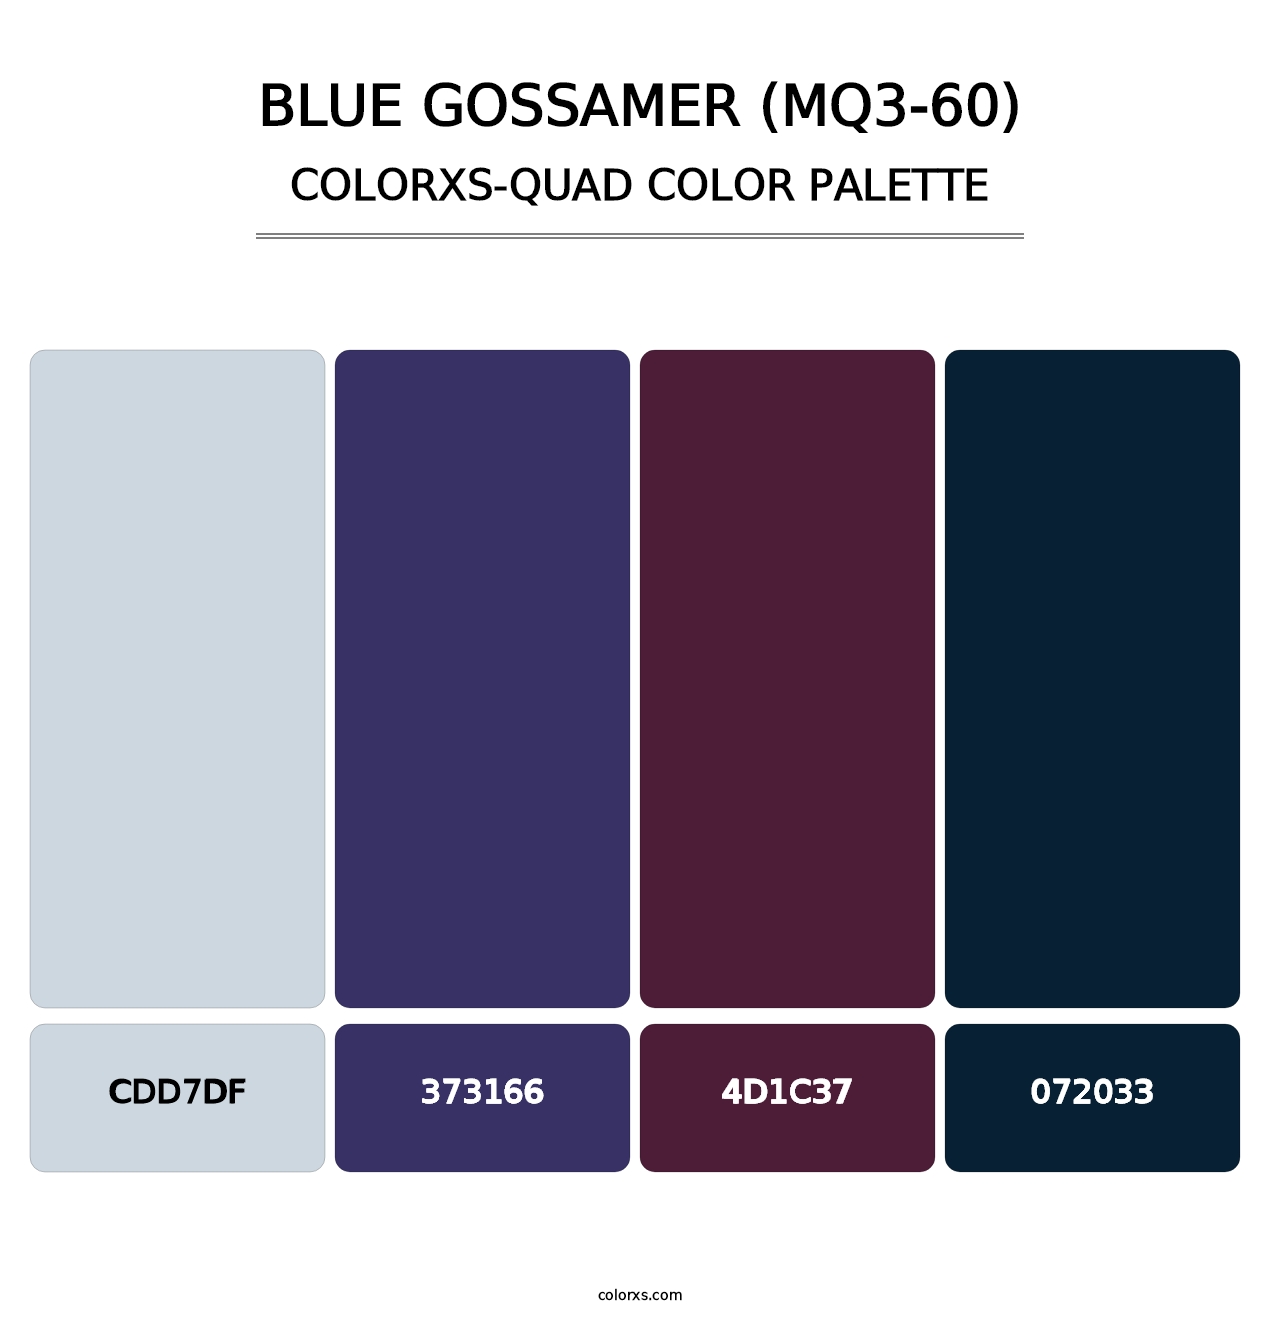 Blue Gossamer (MQ3-60) - Colorxs Quad Palette